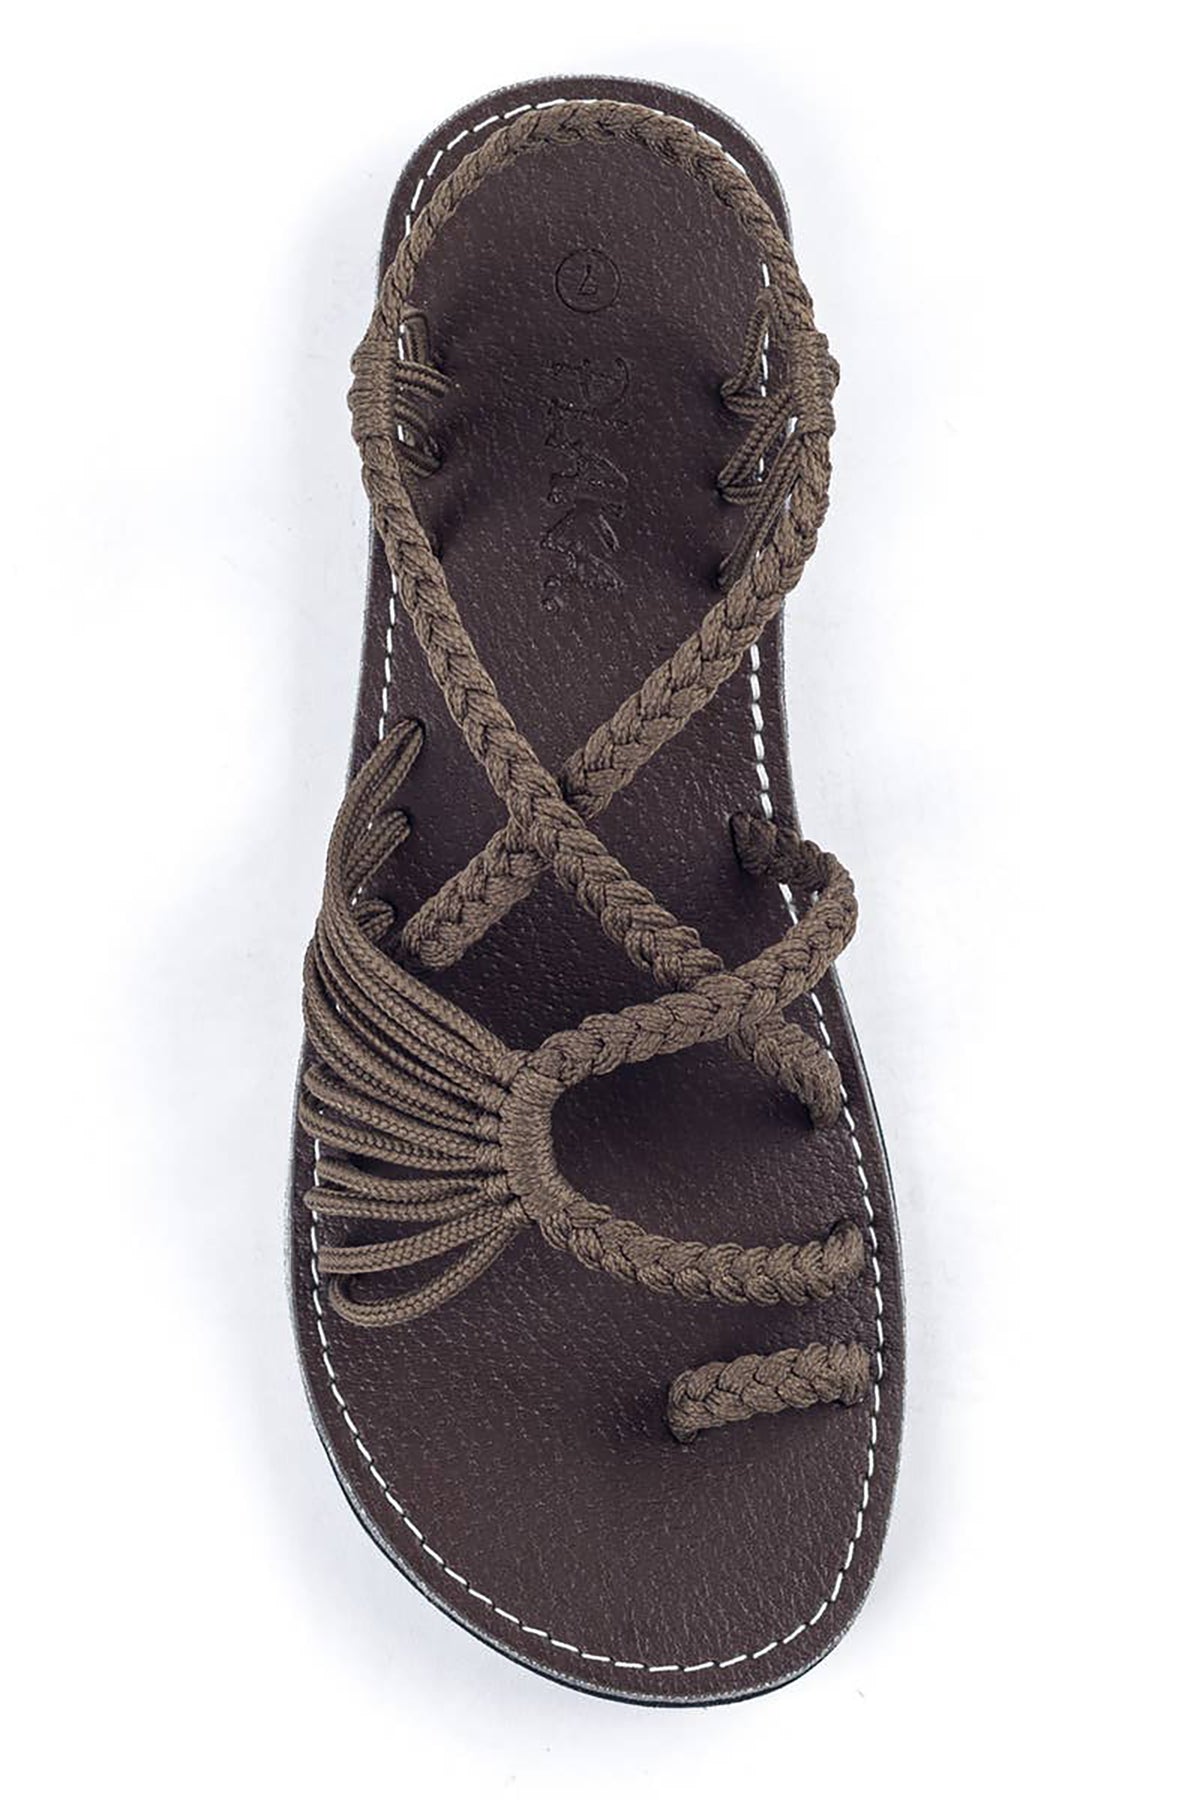 Palm Leaf Flat Summer Sandals - Taupe